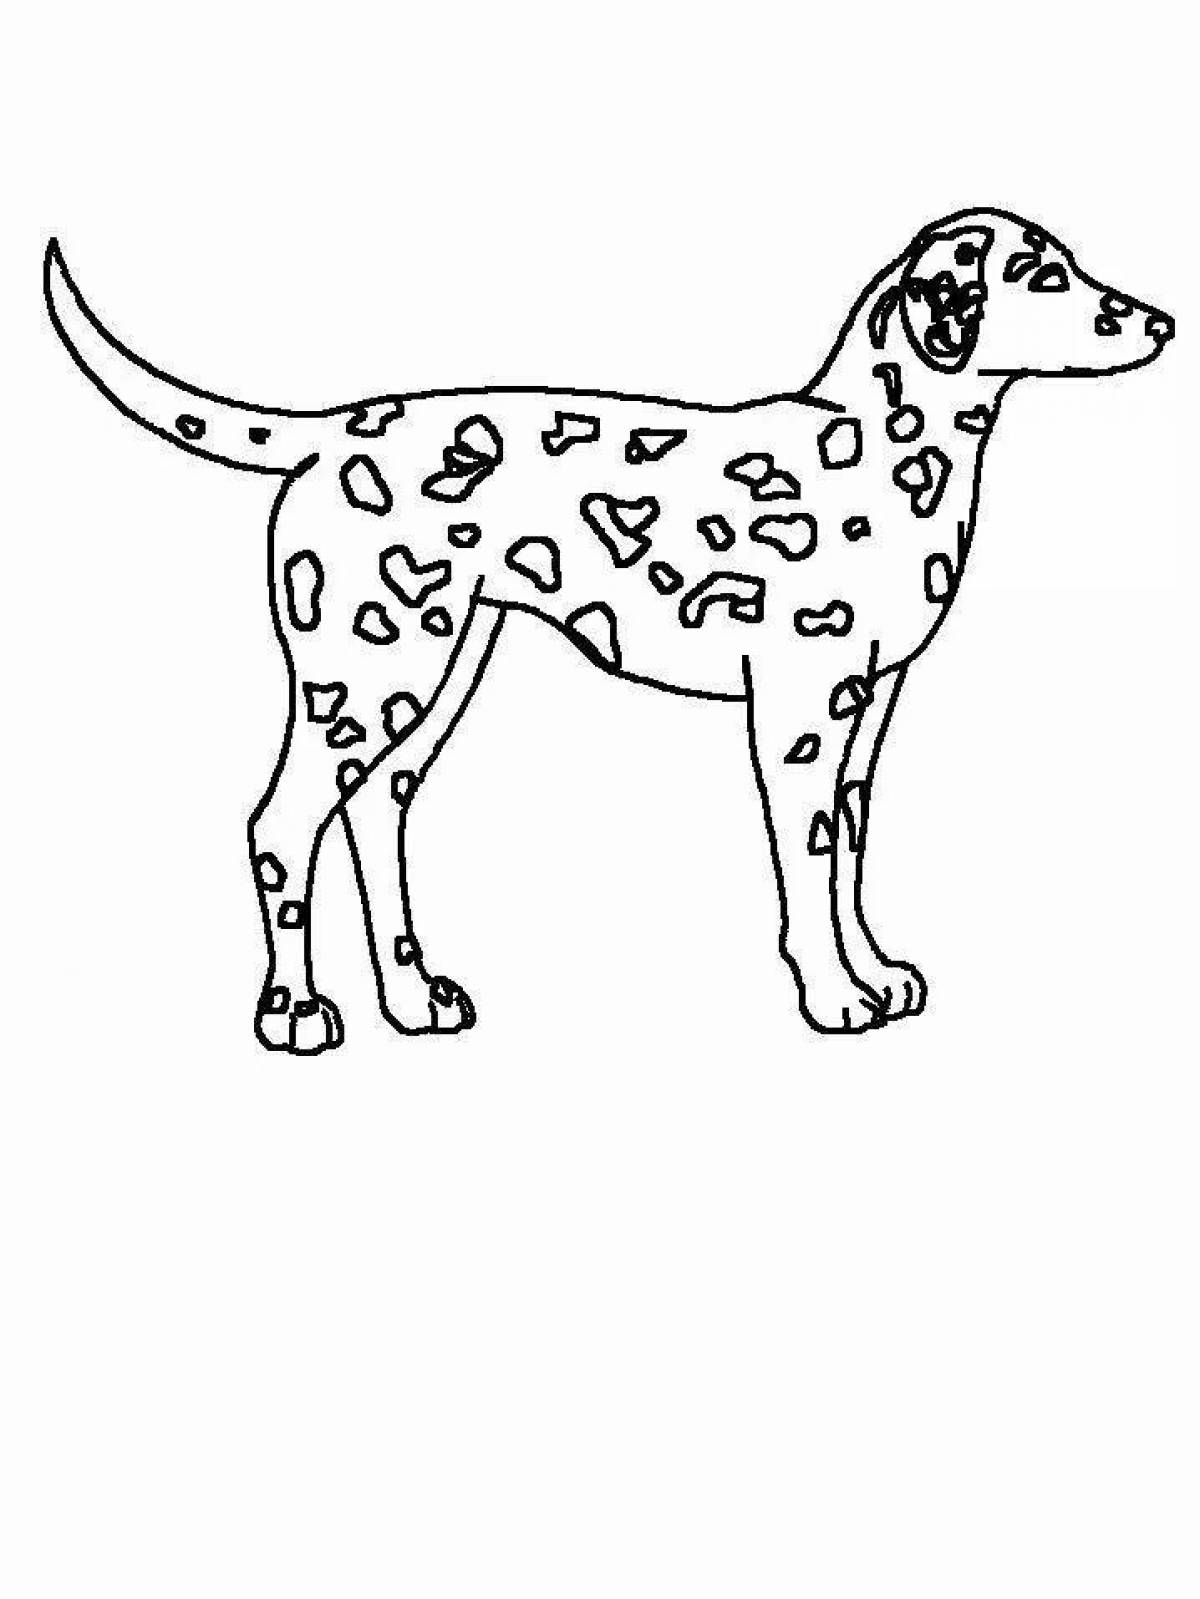 Забавная раскраска собаки из картона